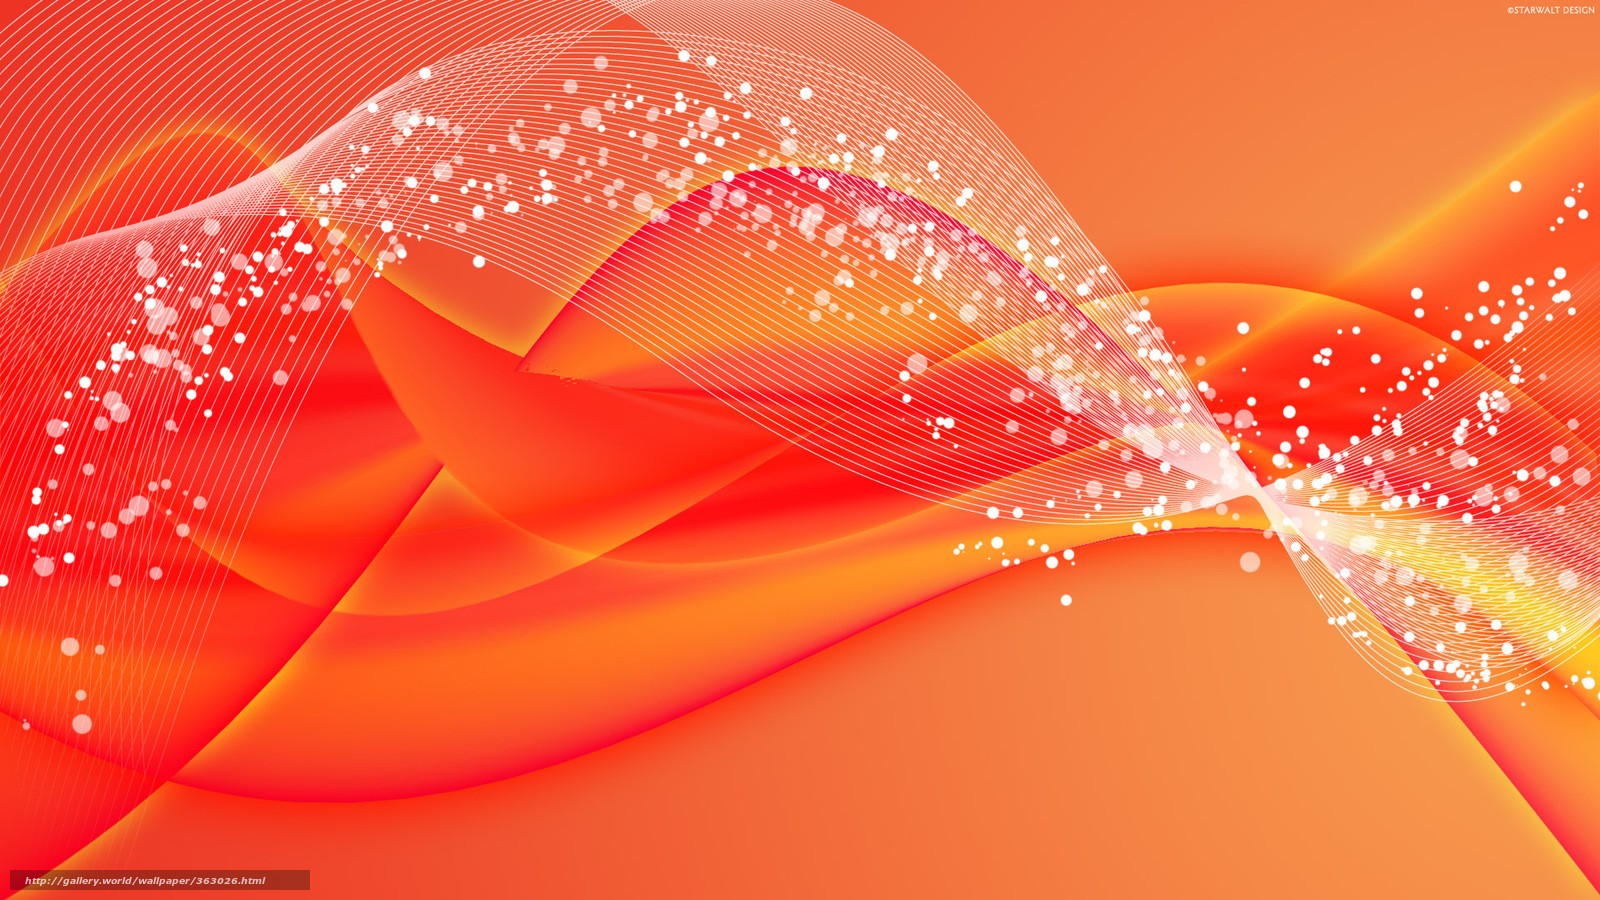 Download wallpaper orange pink line bubbles free